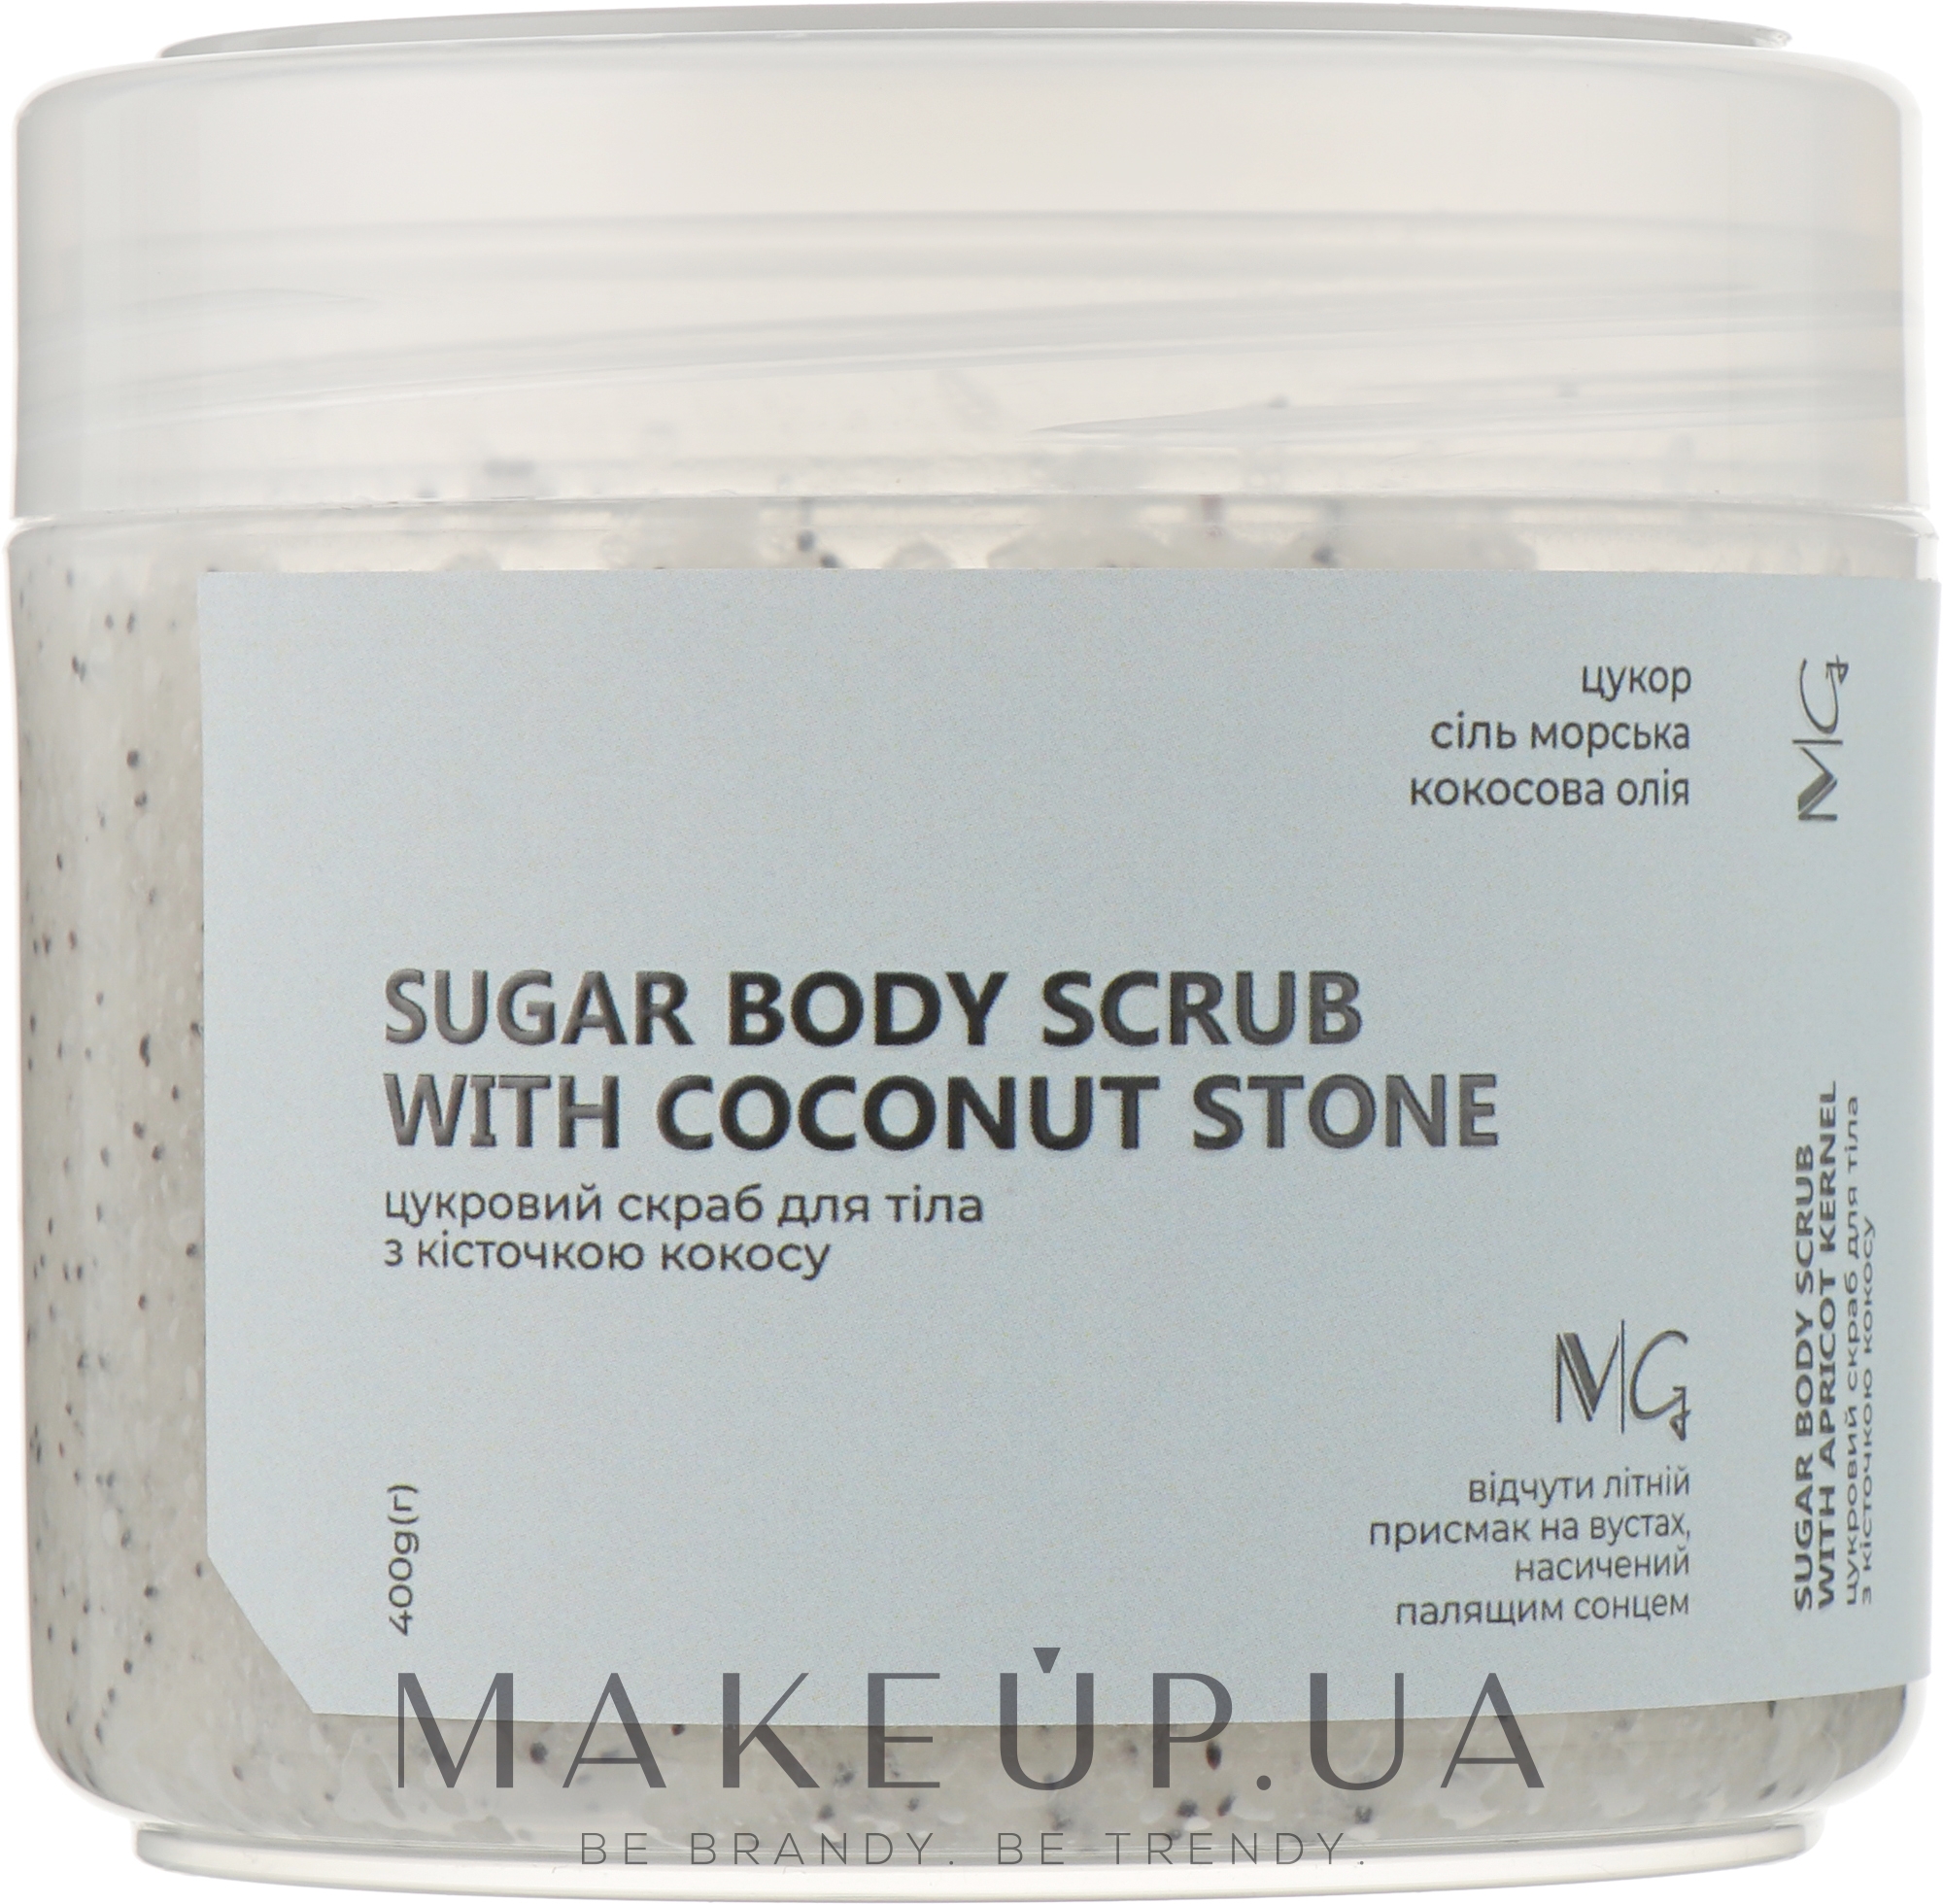 Сахарный скраб для тела, с косточкой кокоса - MG Sugar Body Scrub With Coconut Stone — фото 400g